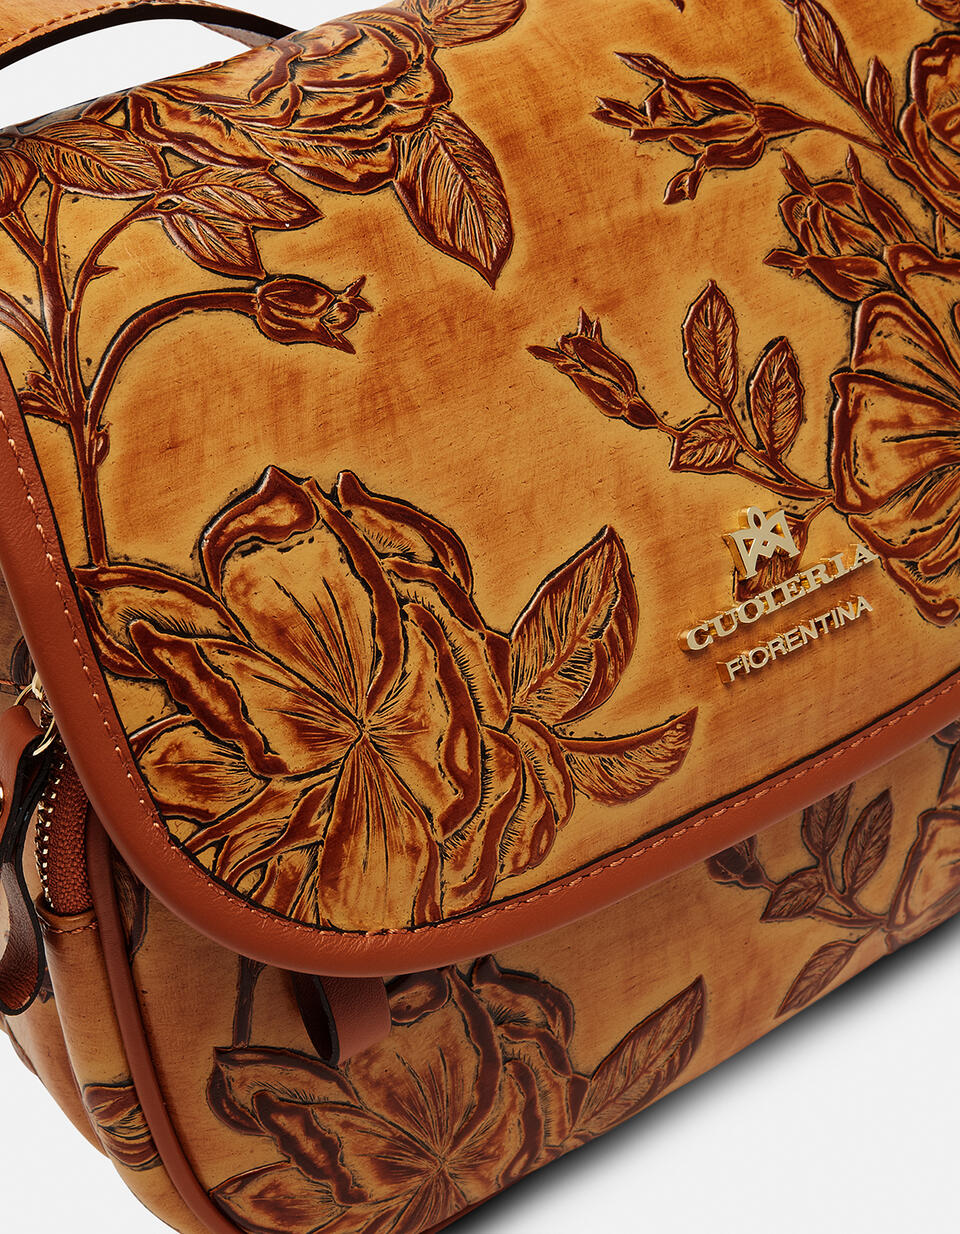 Messenger bag in rose embossed printed calfleather - Messenger Bags - WOMEN'S BAGS | bags Mimì BEIGE - Messenger Bags - WOMEN'S BAGS | bagsCuoieria Fiorentina